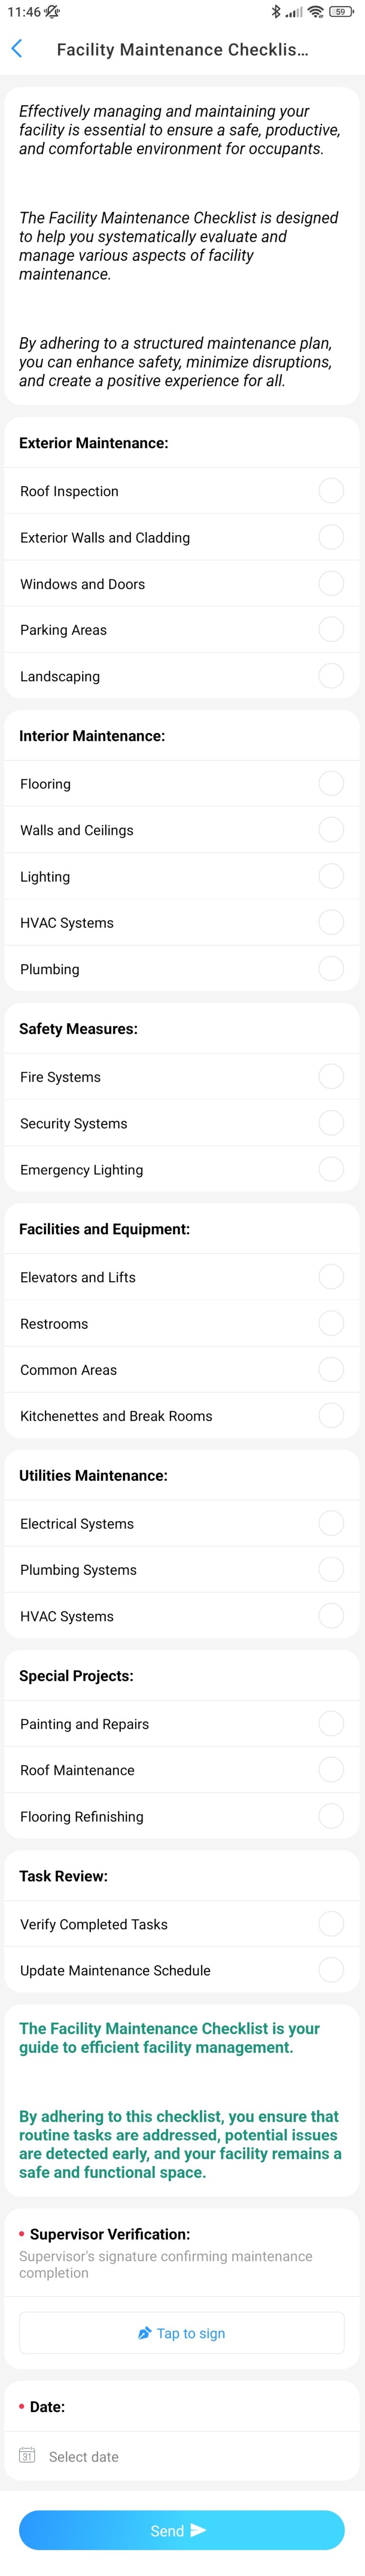 Facility Maintenance Checklist Template